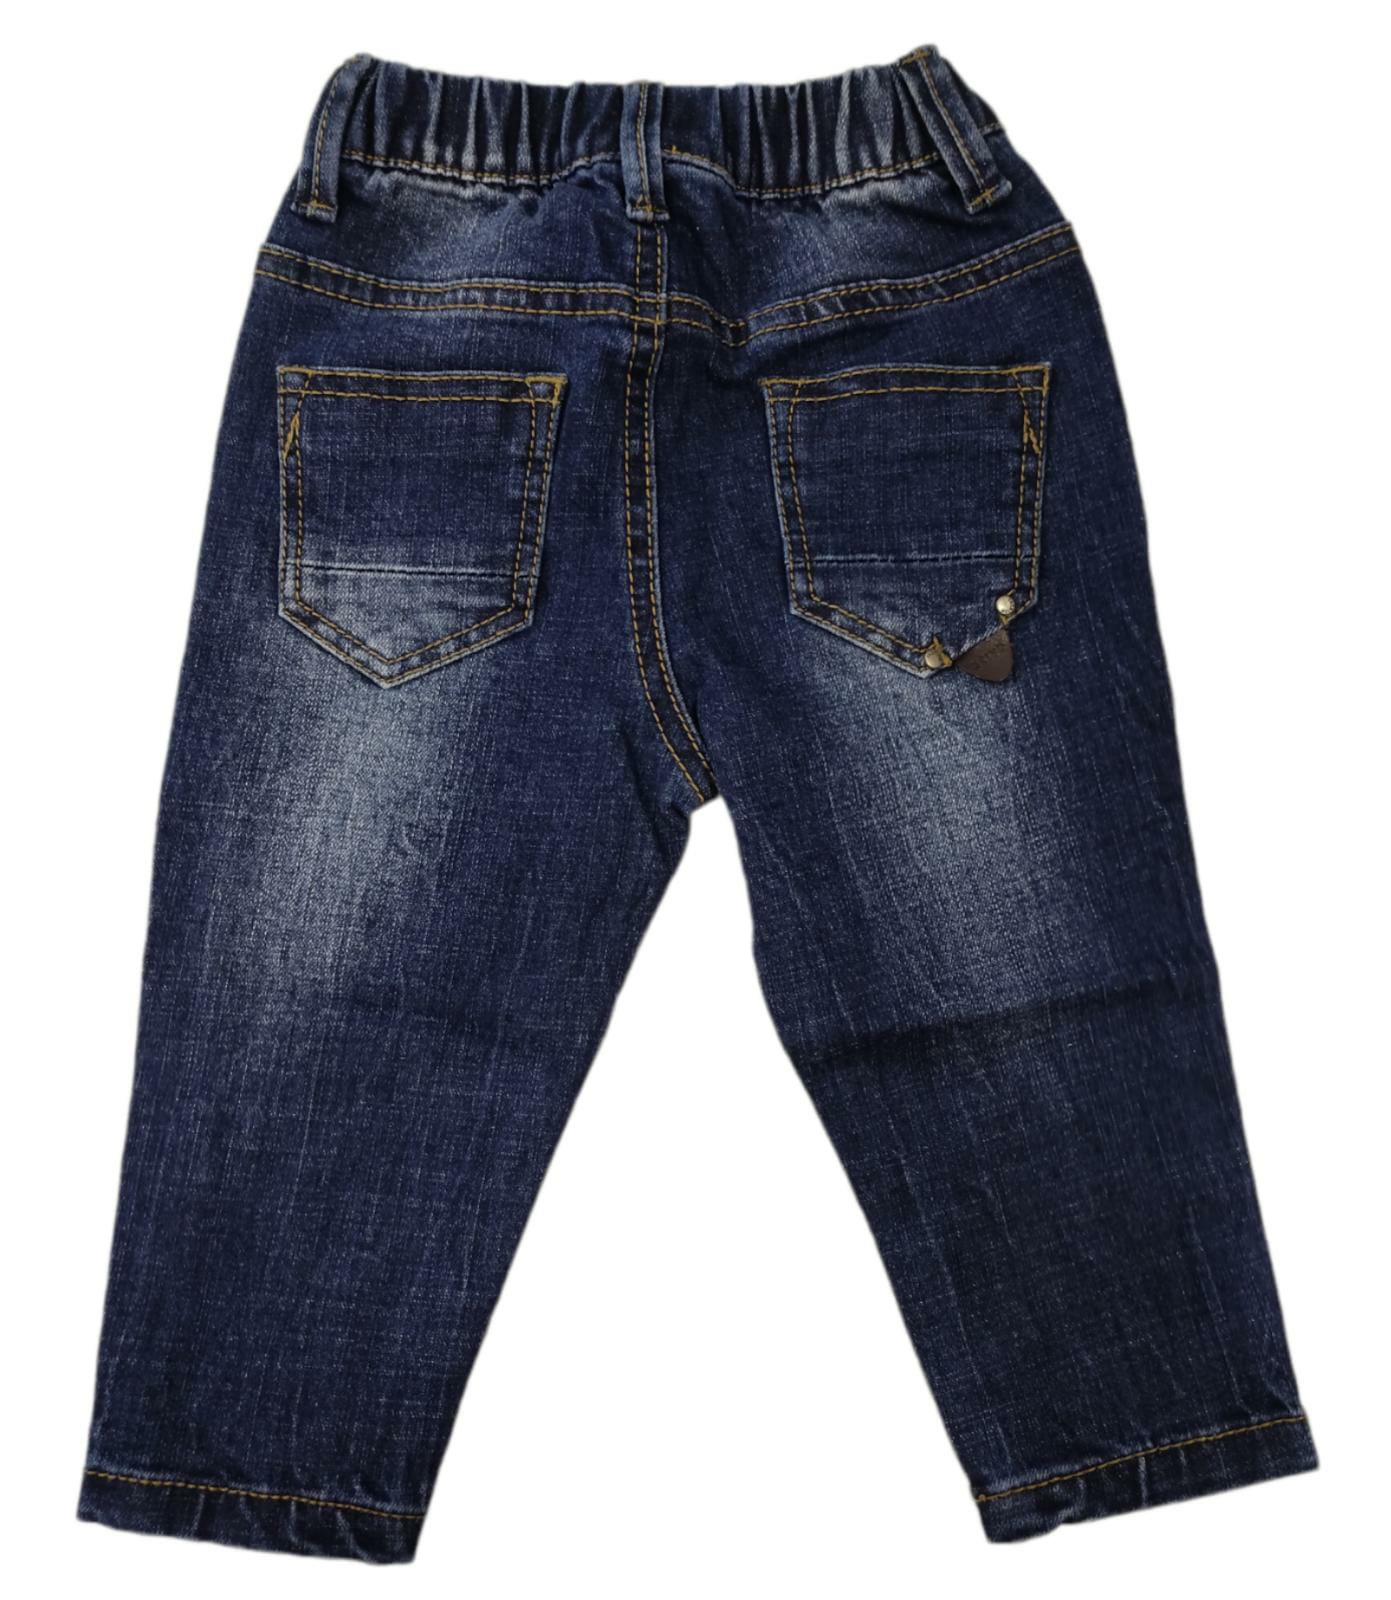 Dark Denim Stretch Jeans for Boys 12-36 Months